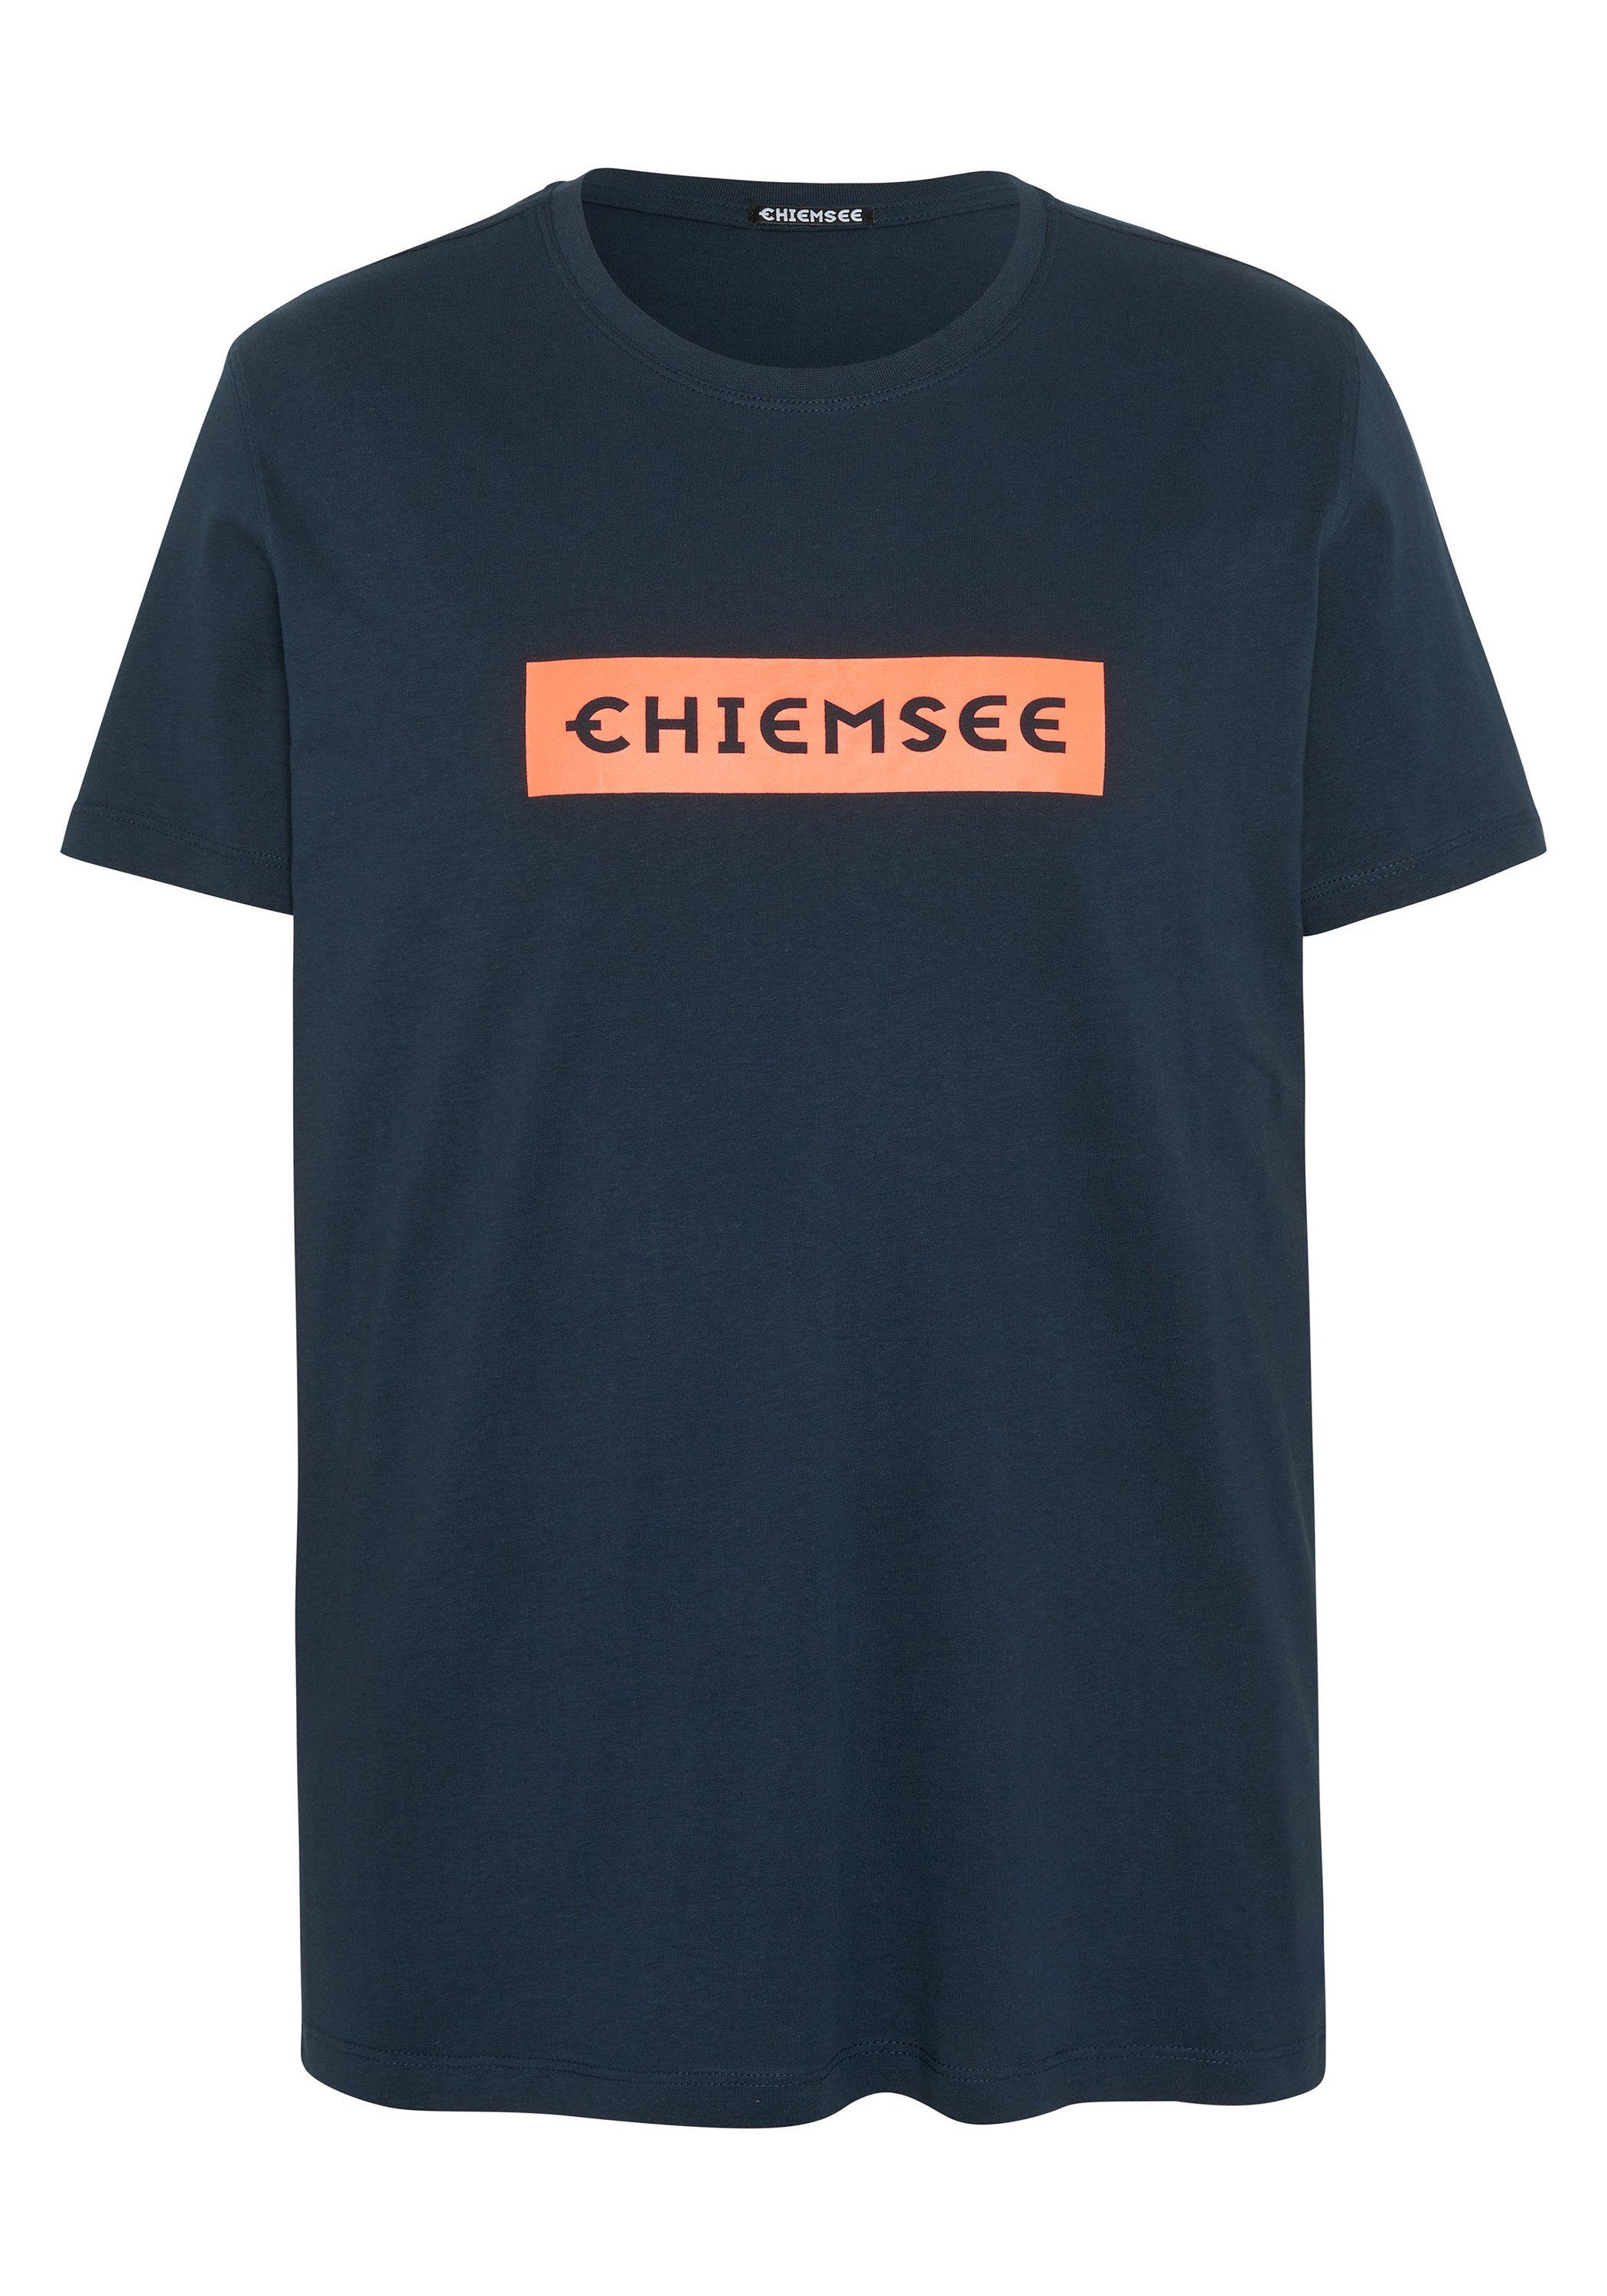 Chiemsee Print-Shirt T-Shirt mit Label-Schriftzug 1 19-4010 Total Eclipse